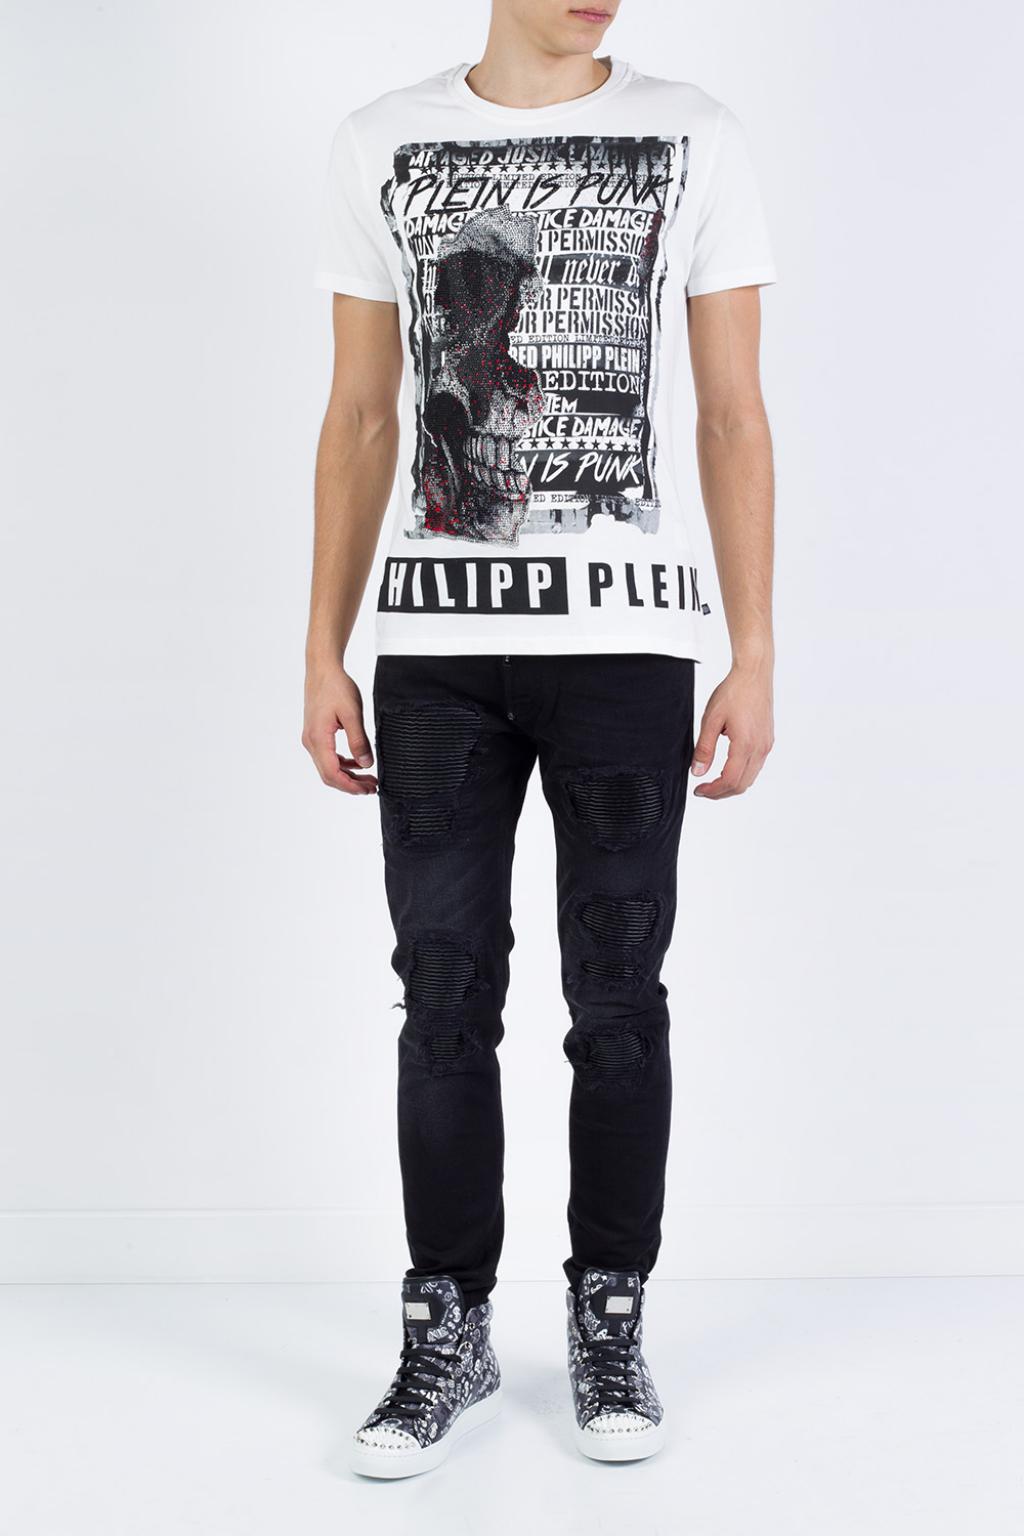  Philipp Plein T-shirts XL : Clothing, Shoes & Jewelry